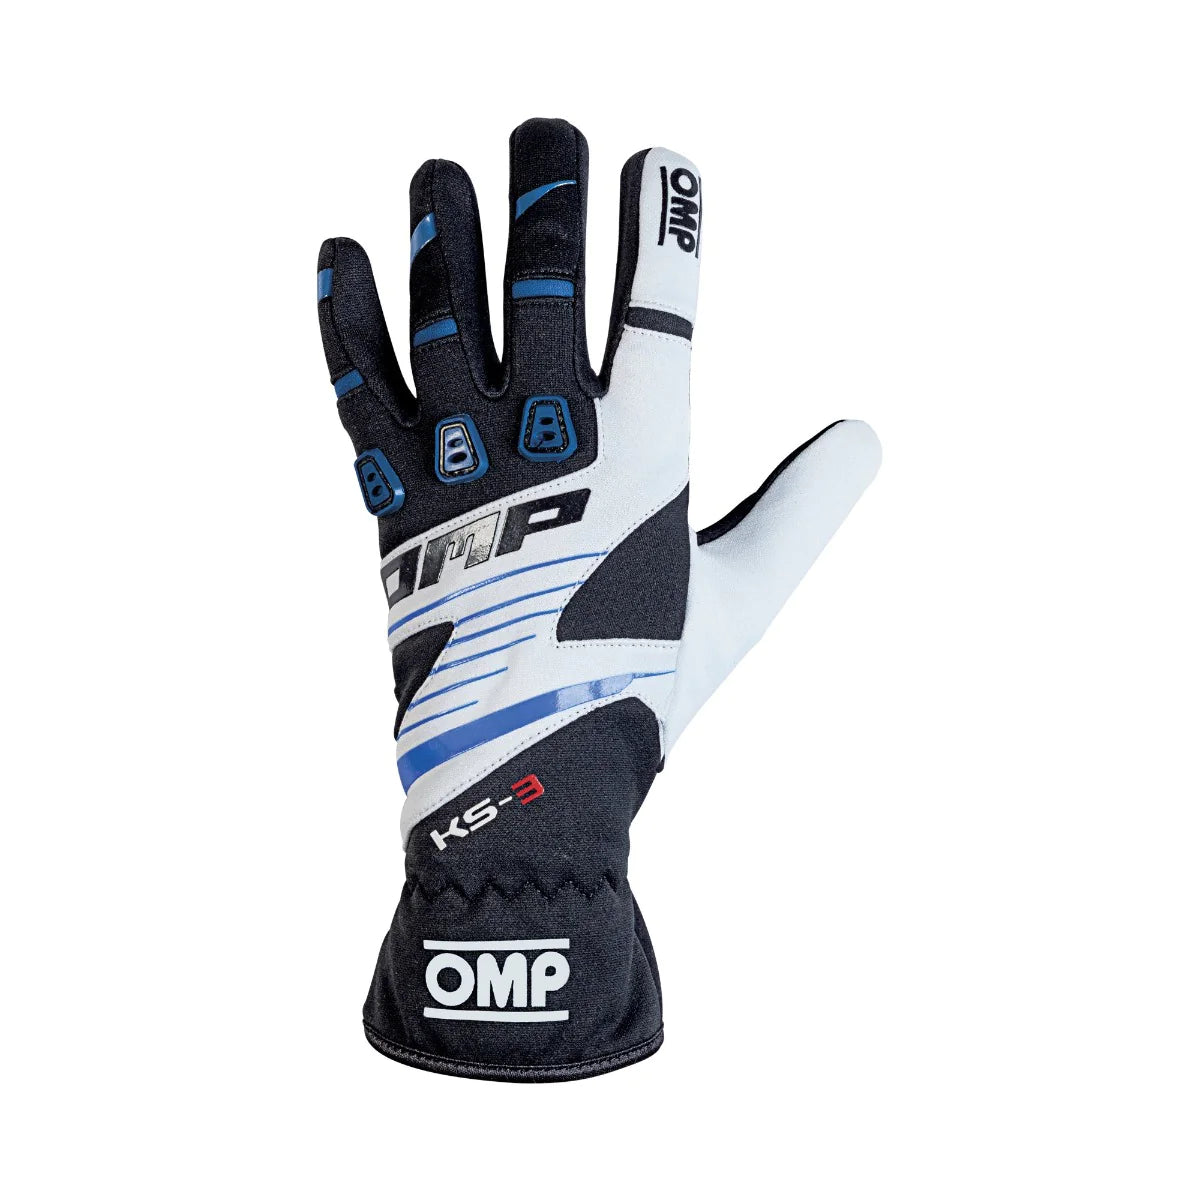 OMP KS-3 Kart Racing Glove